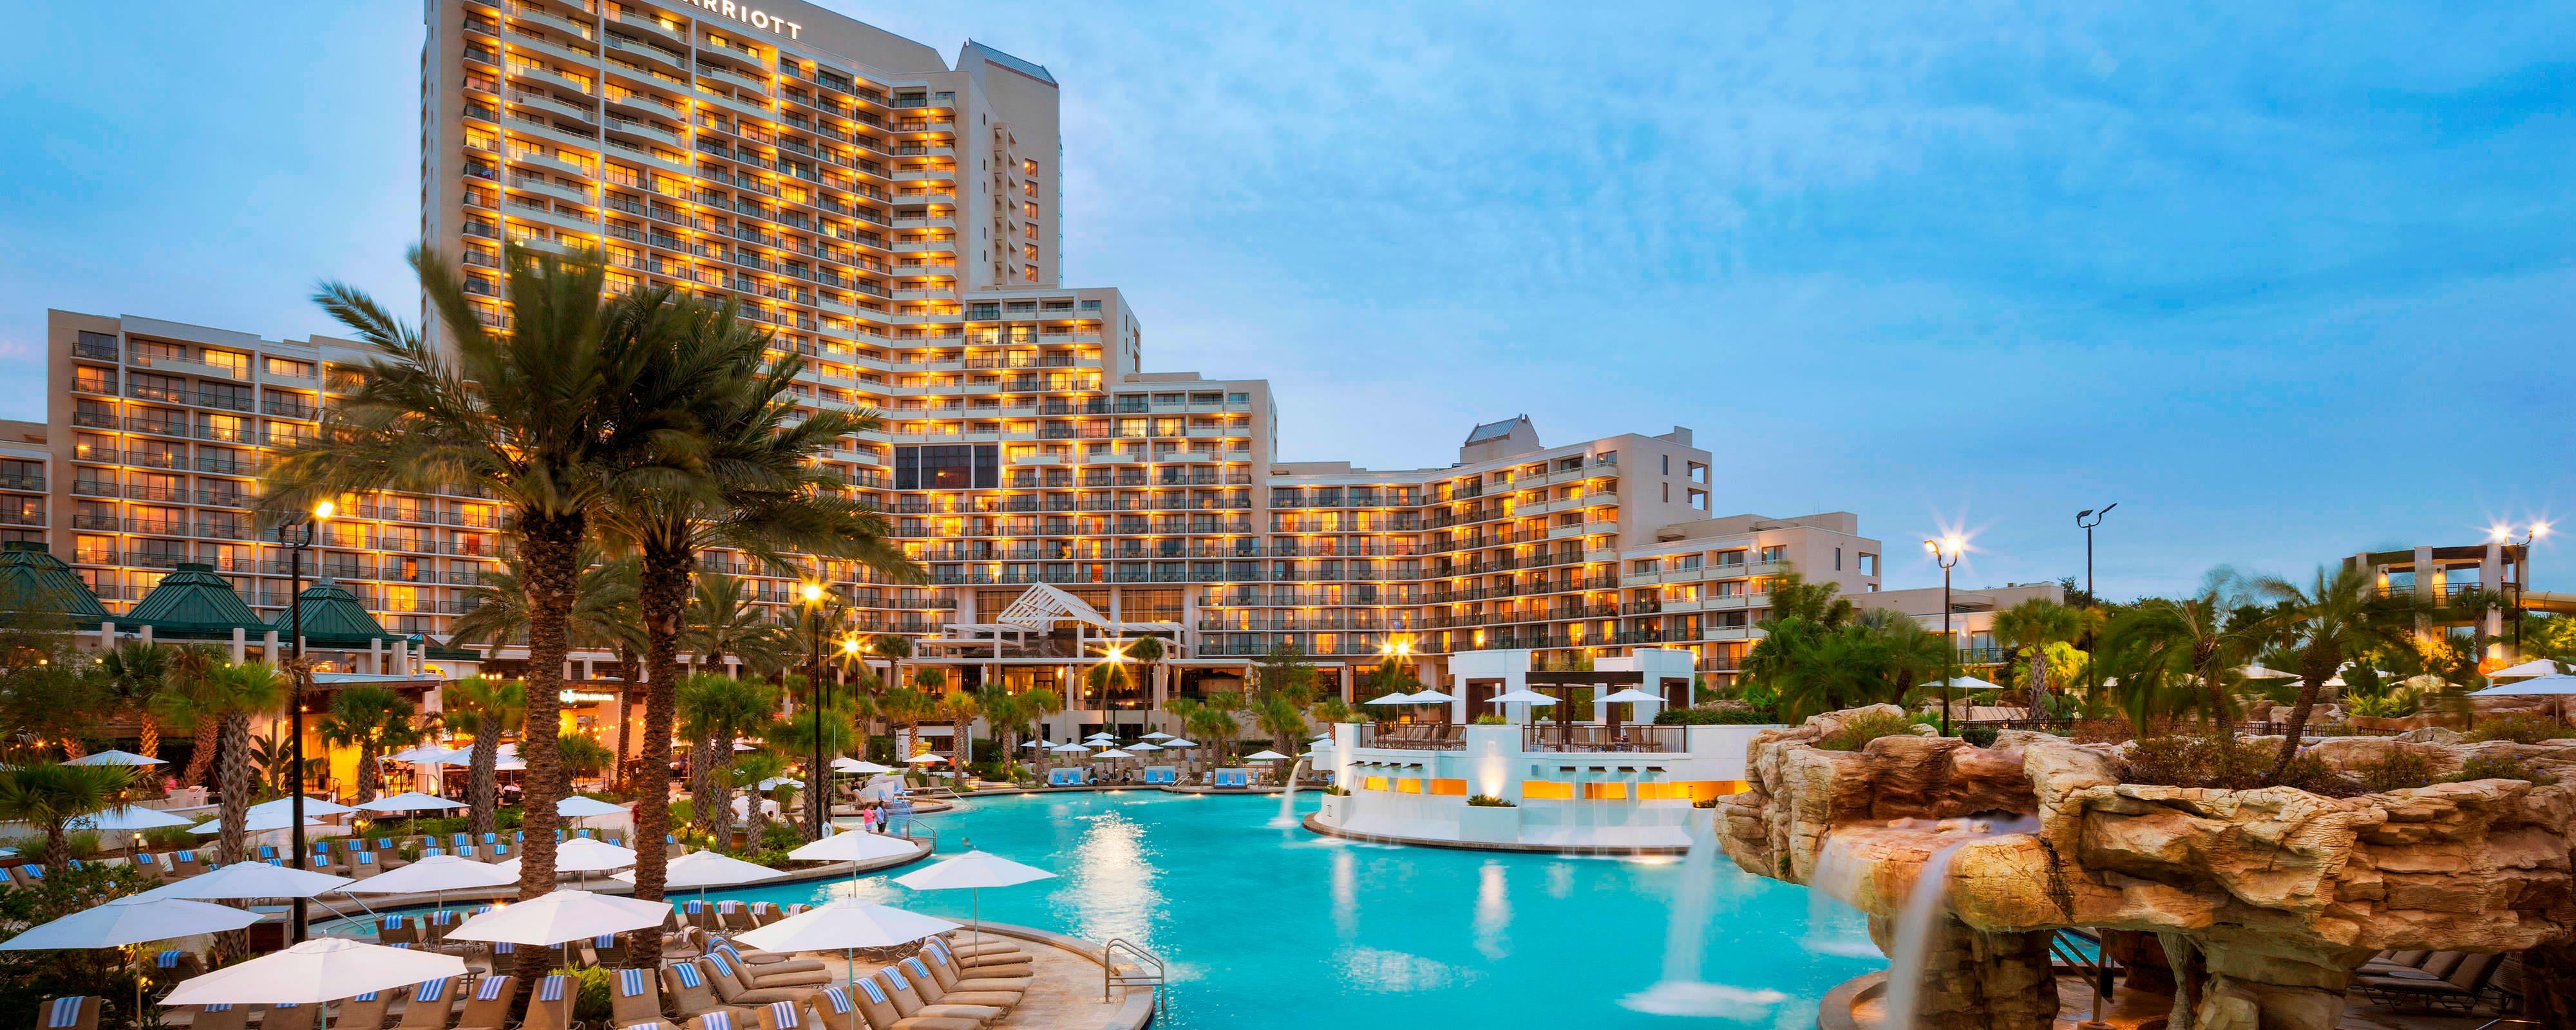 Orlando, Florida Resort | Orlando World Center Marriott